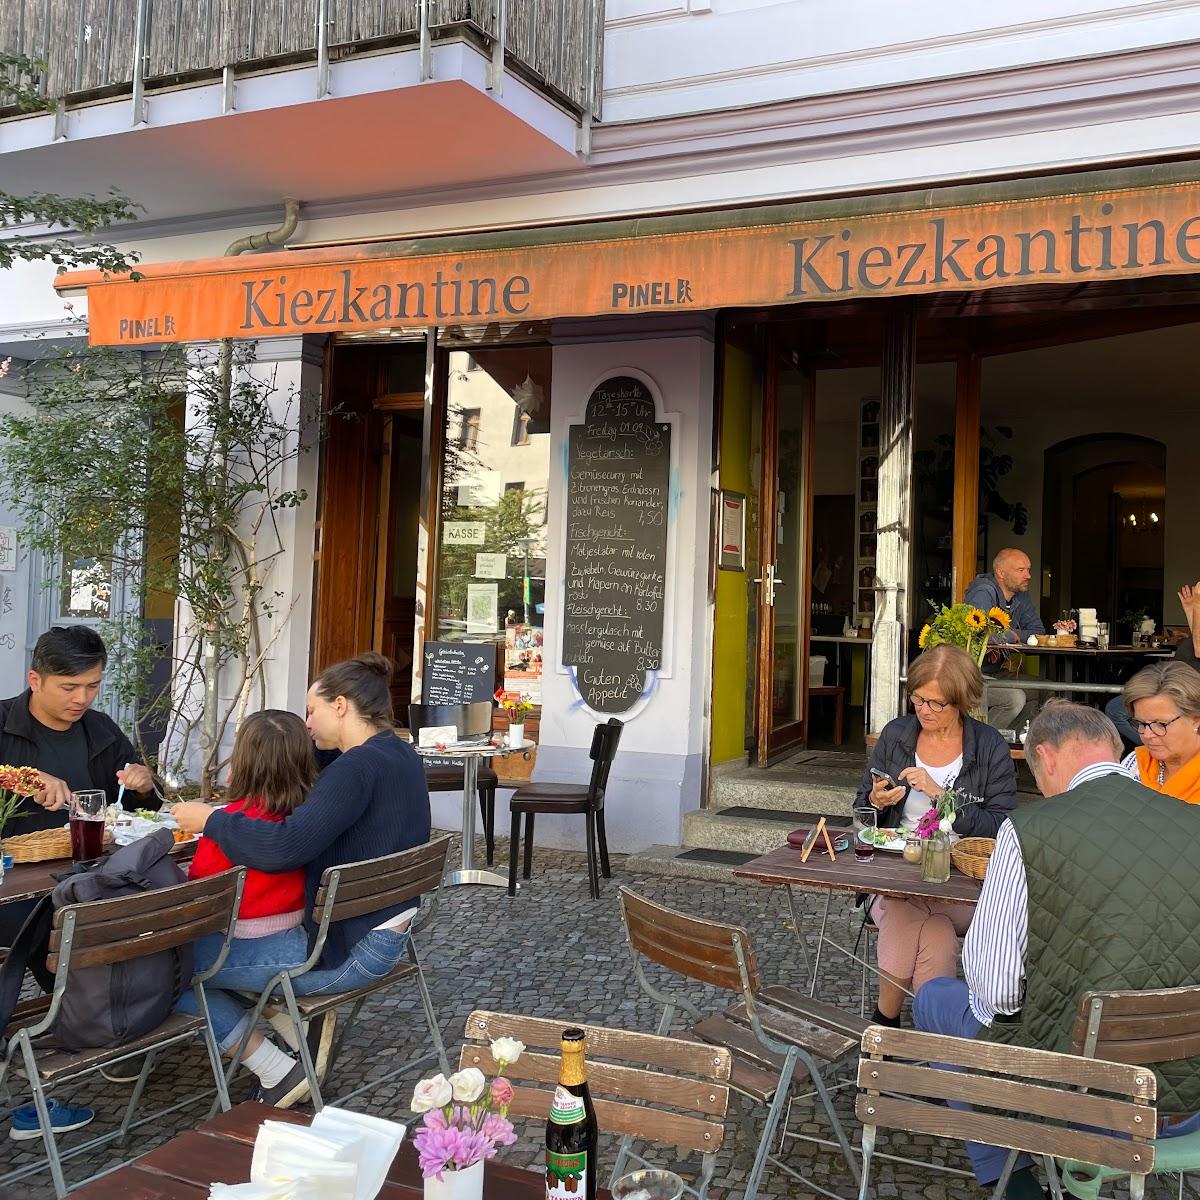 Restaurant "Kiezkantine" in Berlin